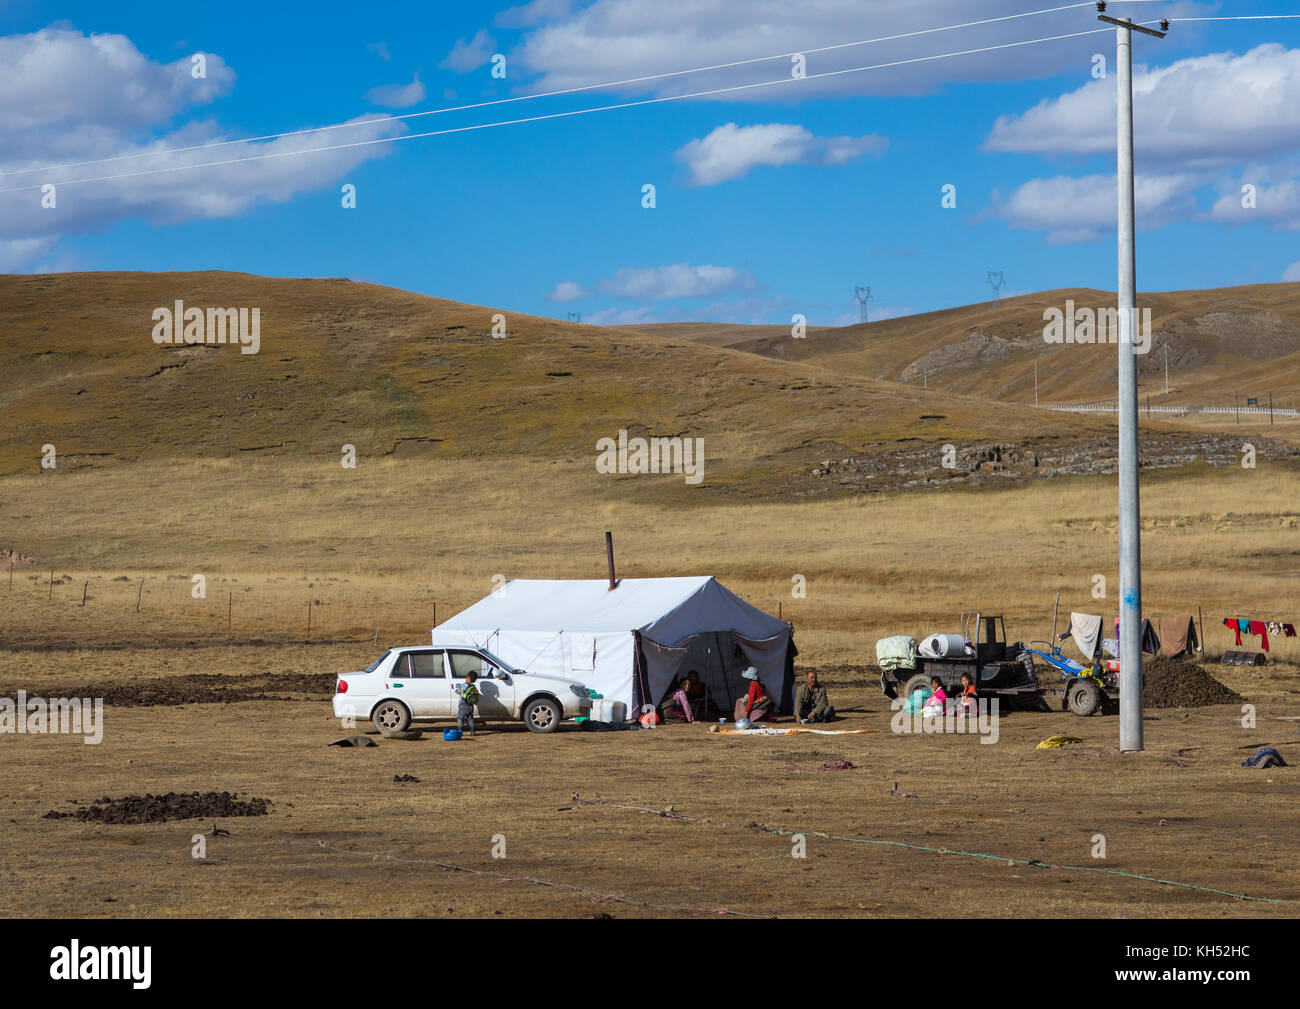 Tibetische Nomaden Familie leben in einem Zelt im Grasland, Provinz Qinghai, Tsekhog, China Stockfoto